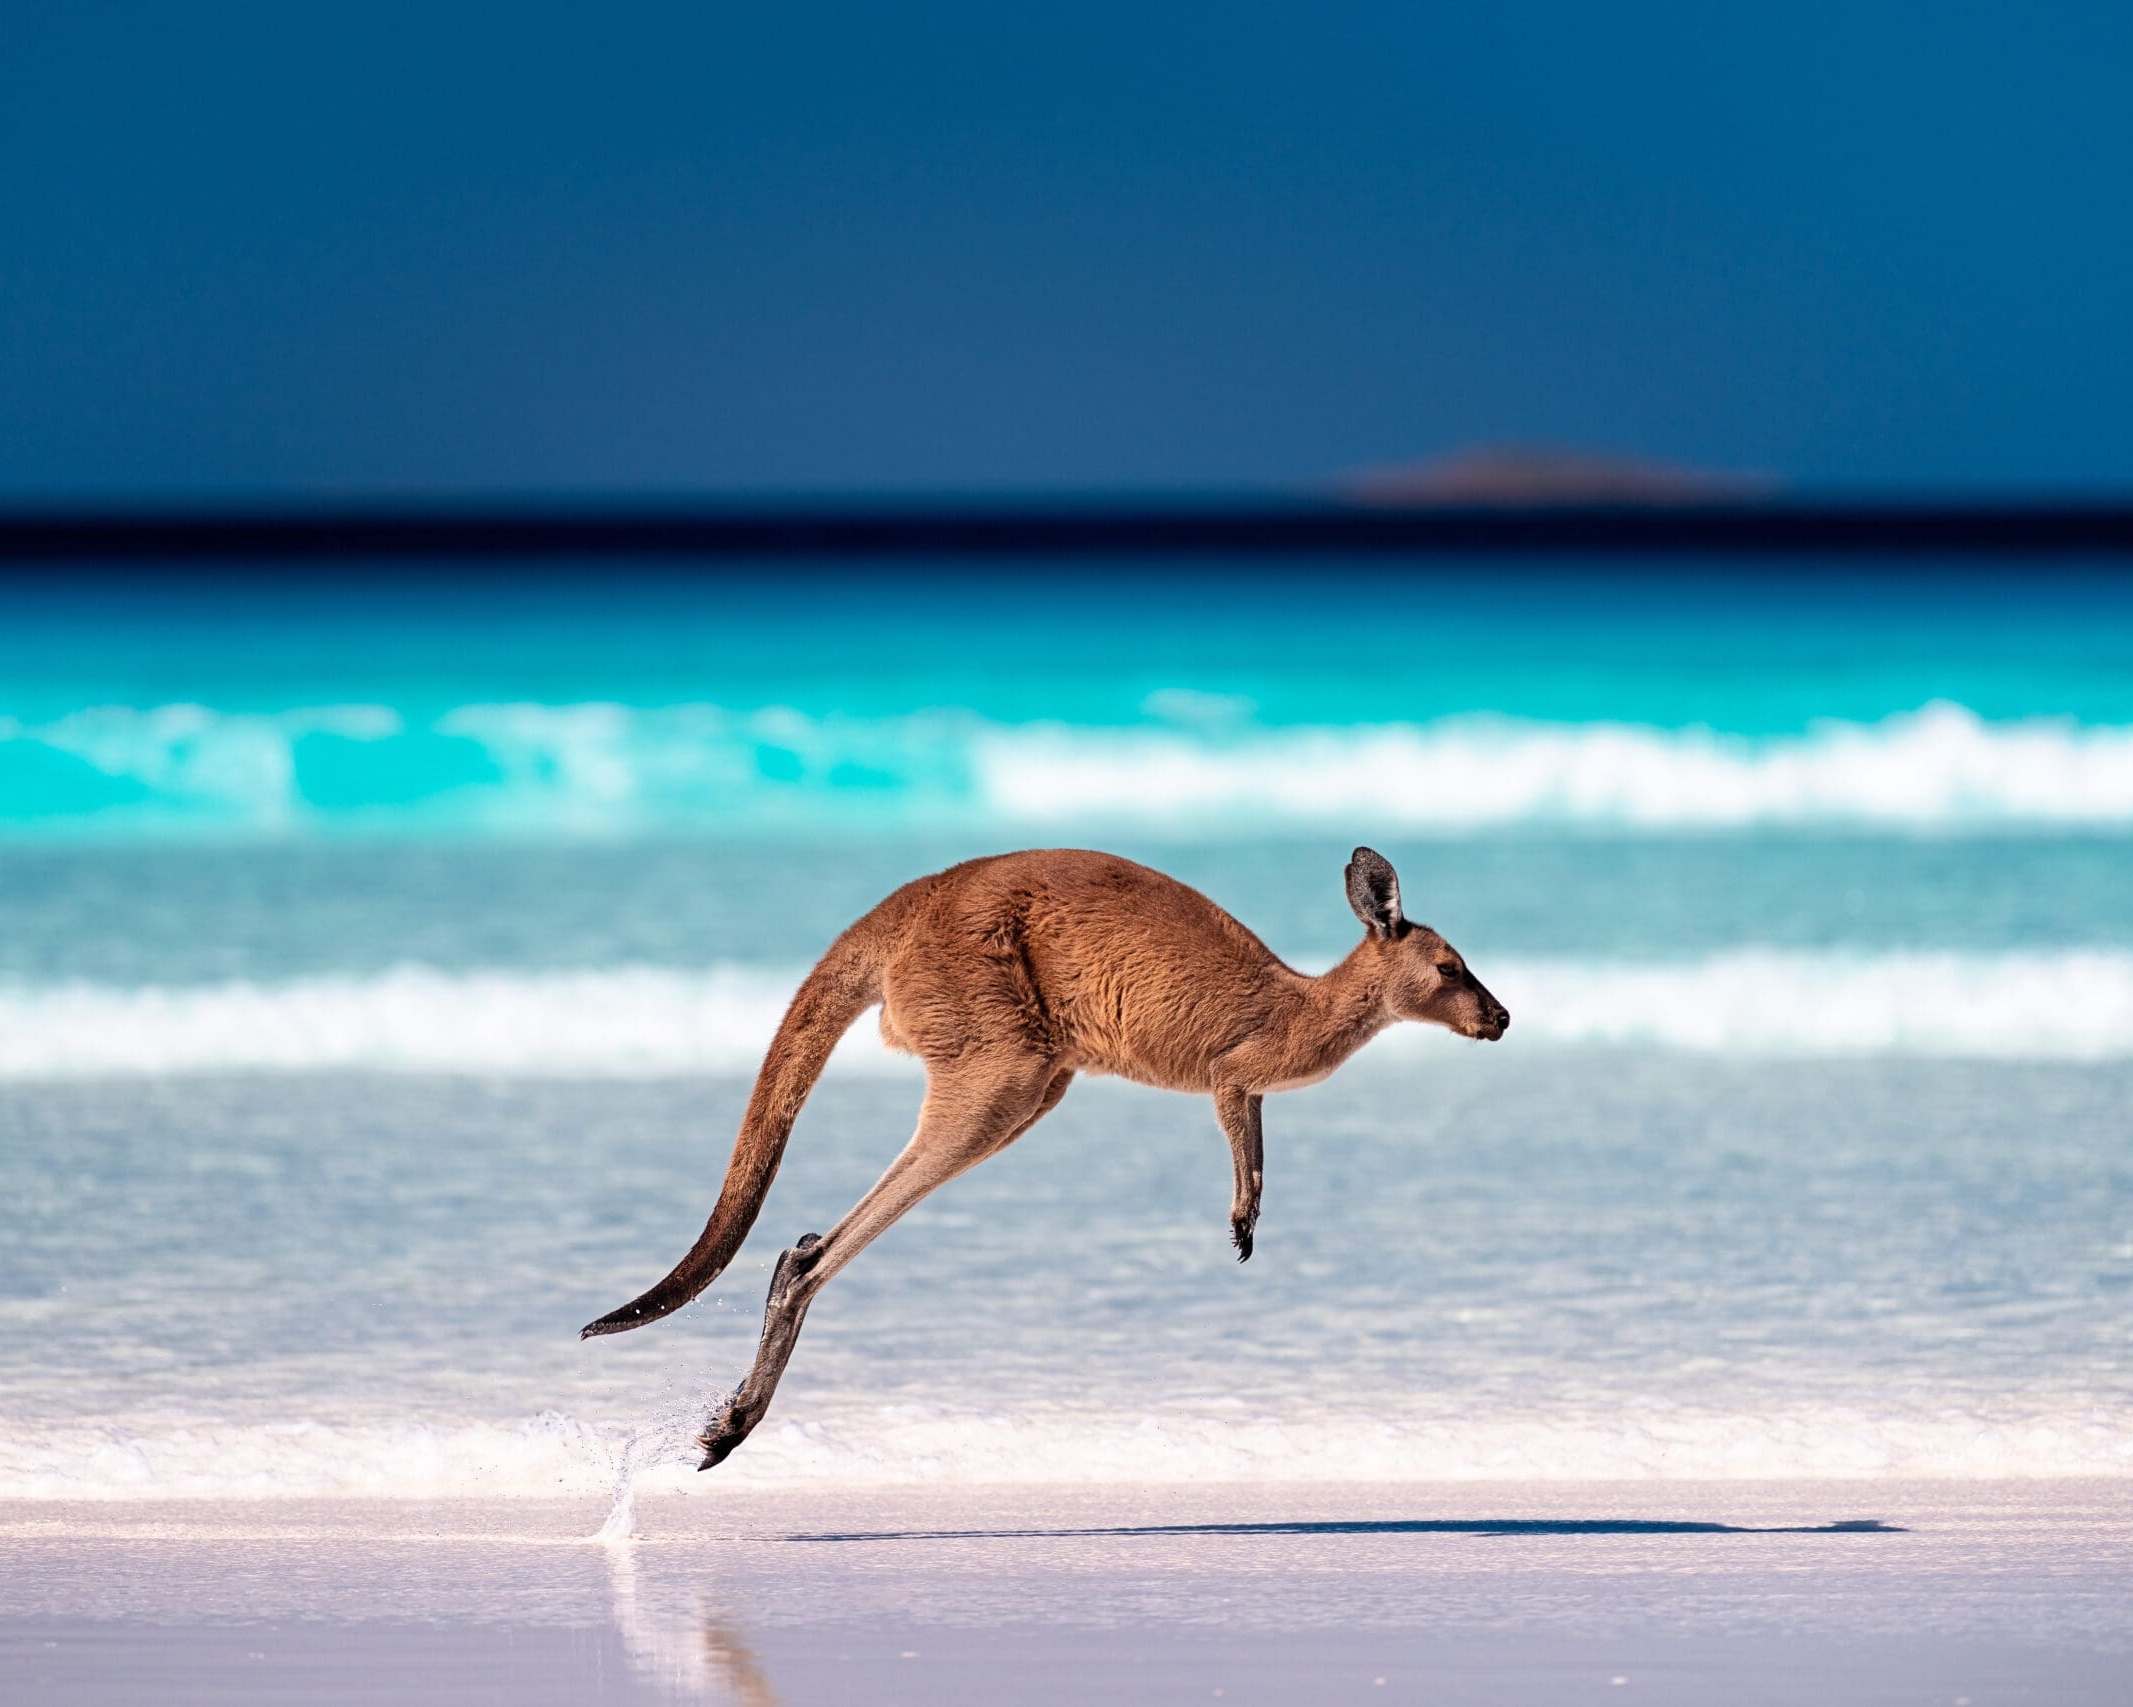 angaroo hopping / jumping mid air on sand near the surf on the beach at Lucky Bay, Cape Le Grand National Park, Esperance, Western Australia